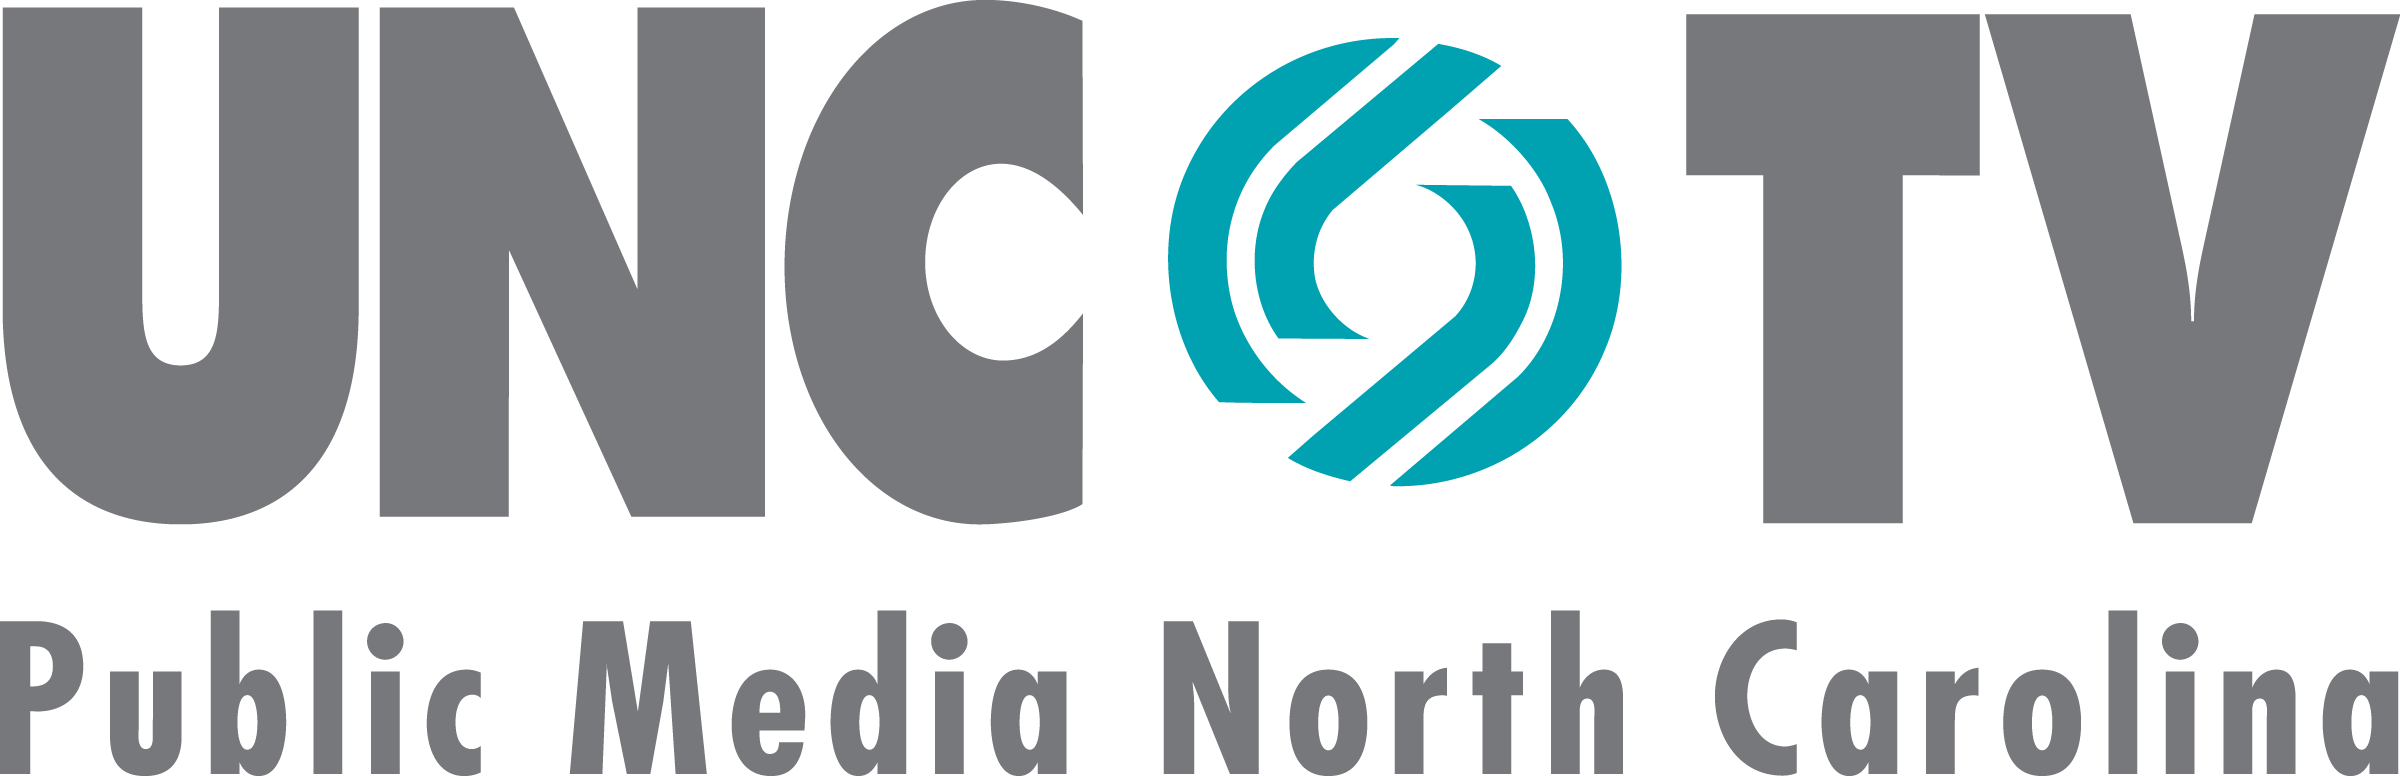 Unc-tv Public Media North Carolina - University Of North Carolina At Wilmington (2400x776)